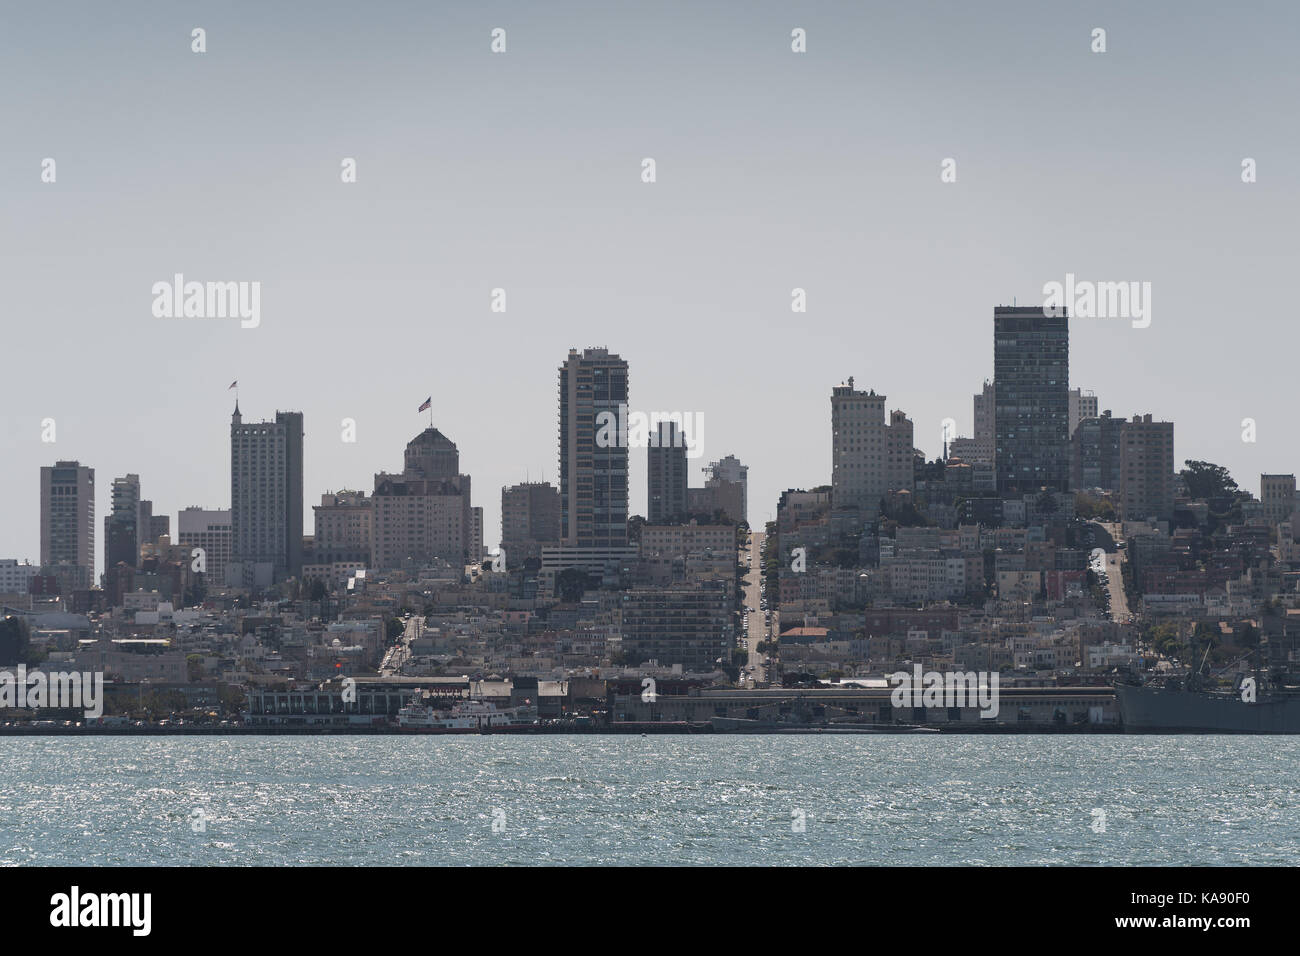 Cityscape of the San Francisco skyline, California, USA, from the San Francisco Bay Stock Photo